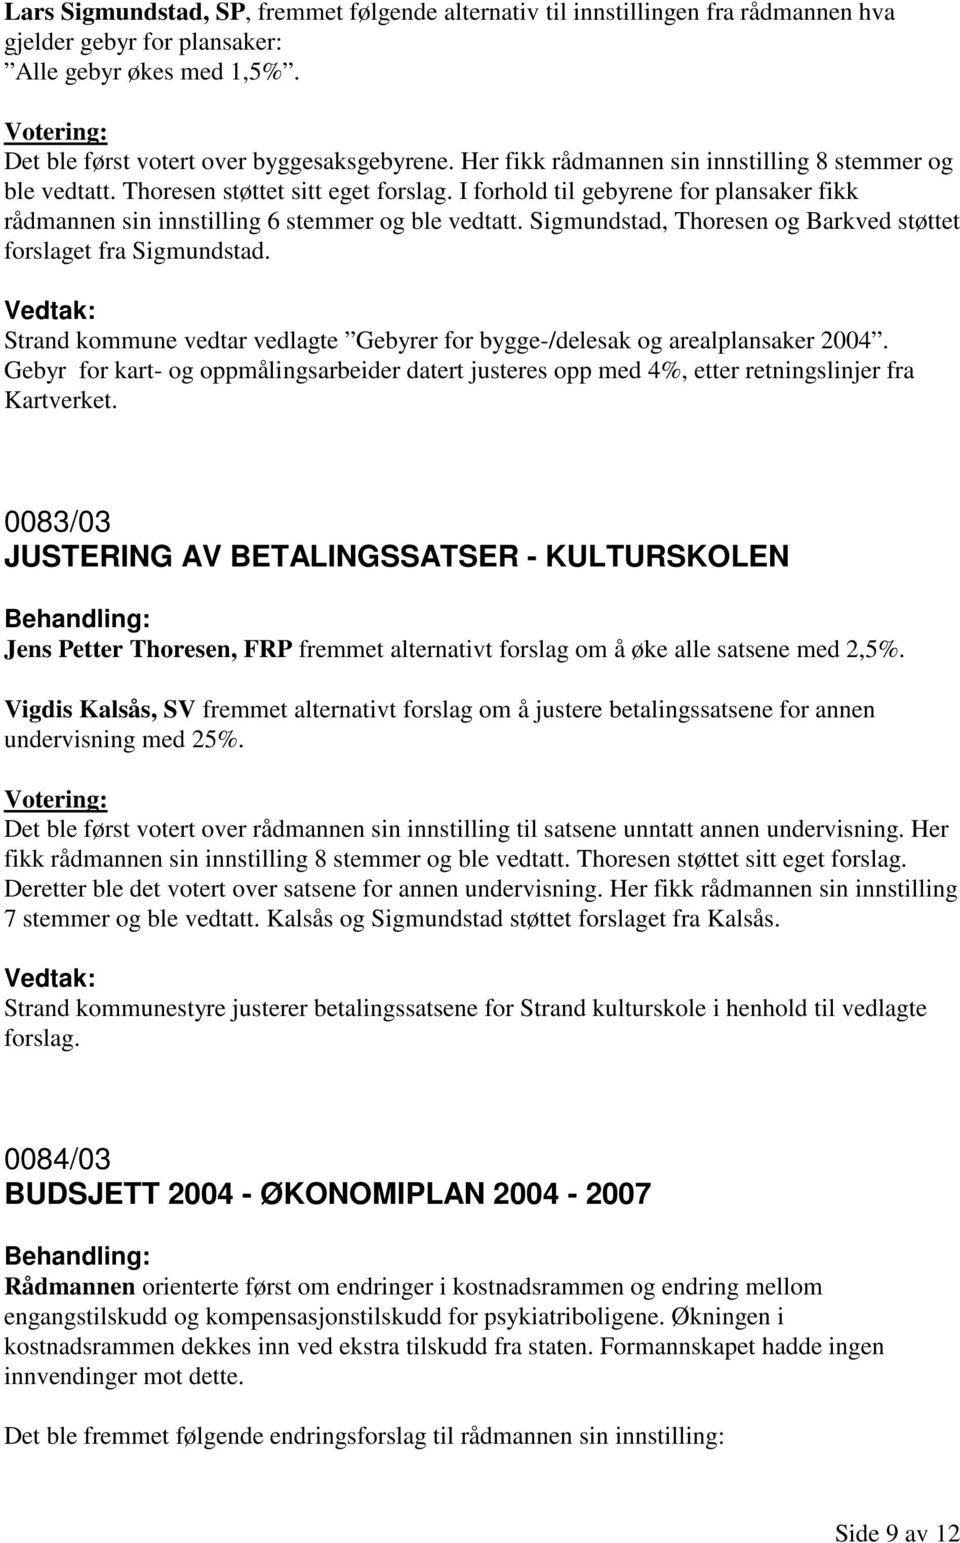 Sigmundstad, Thoresen og Barkved støttet forslaget fra Sigmundstad. Strand kommune vedtar vedlagte Gebyrer for bygge-/delesak og arealplansaker 2004.